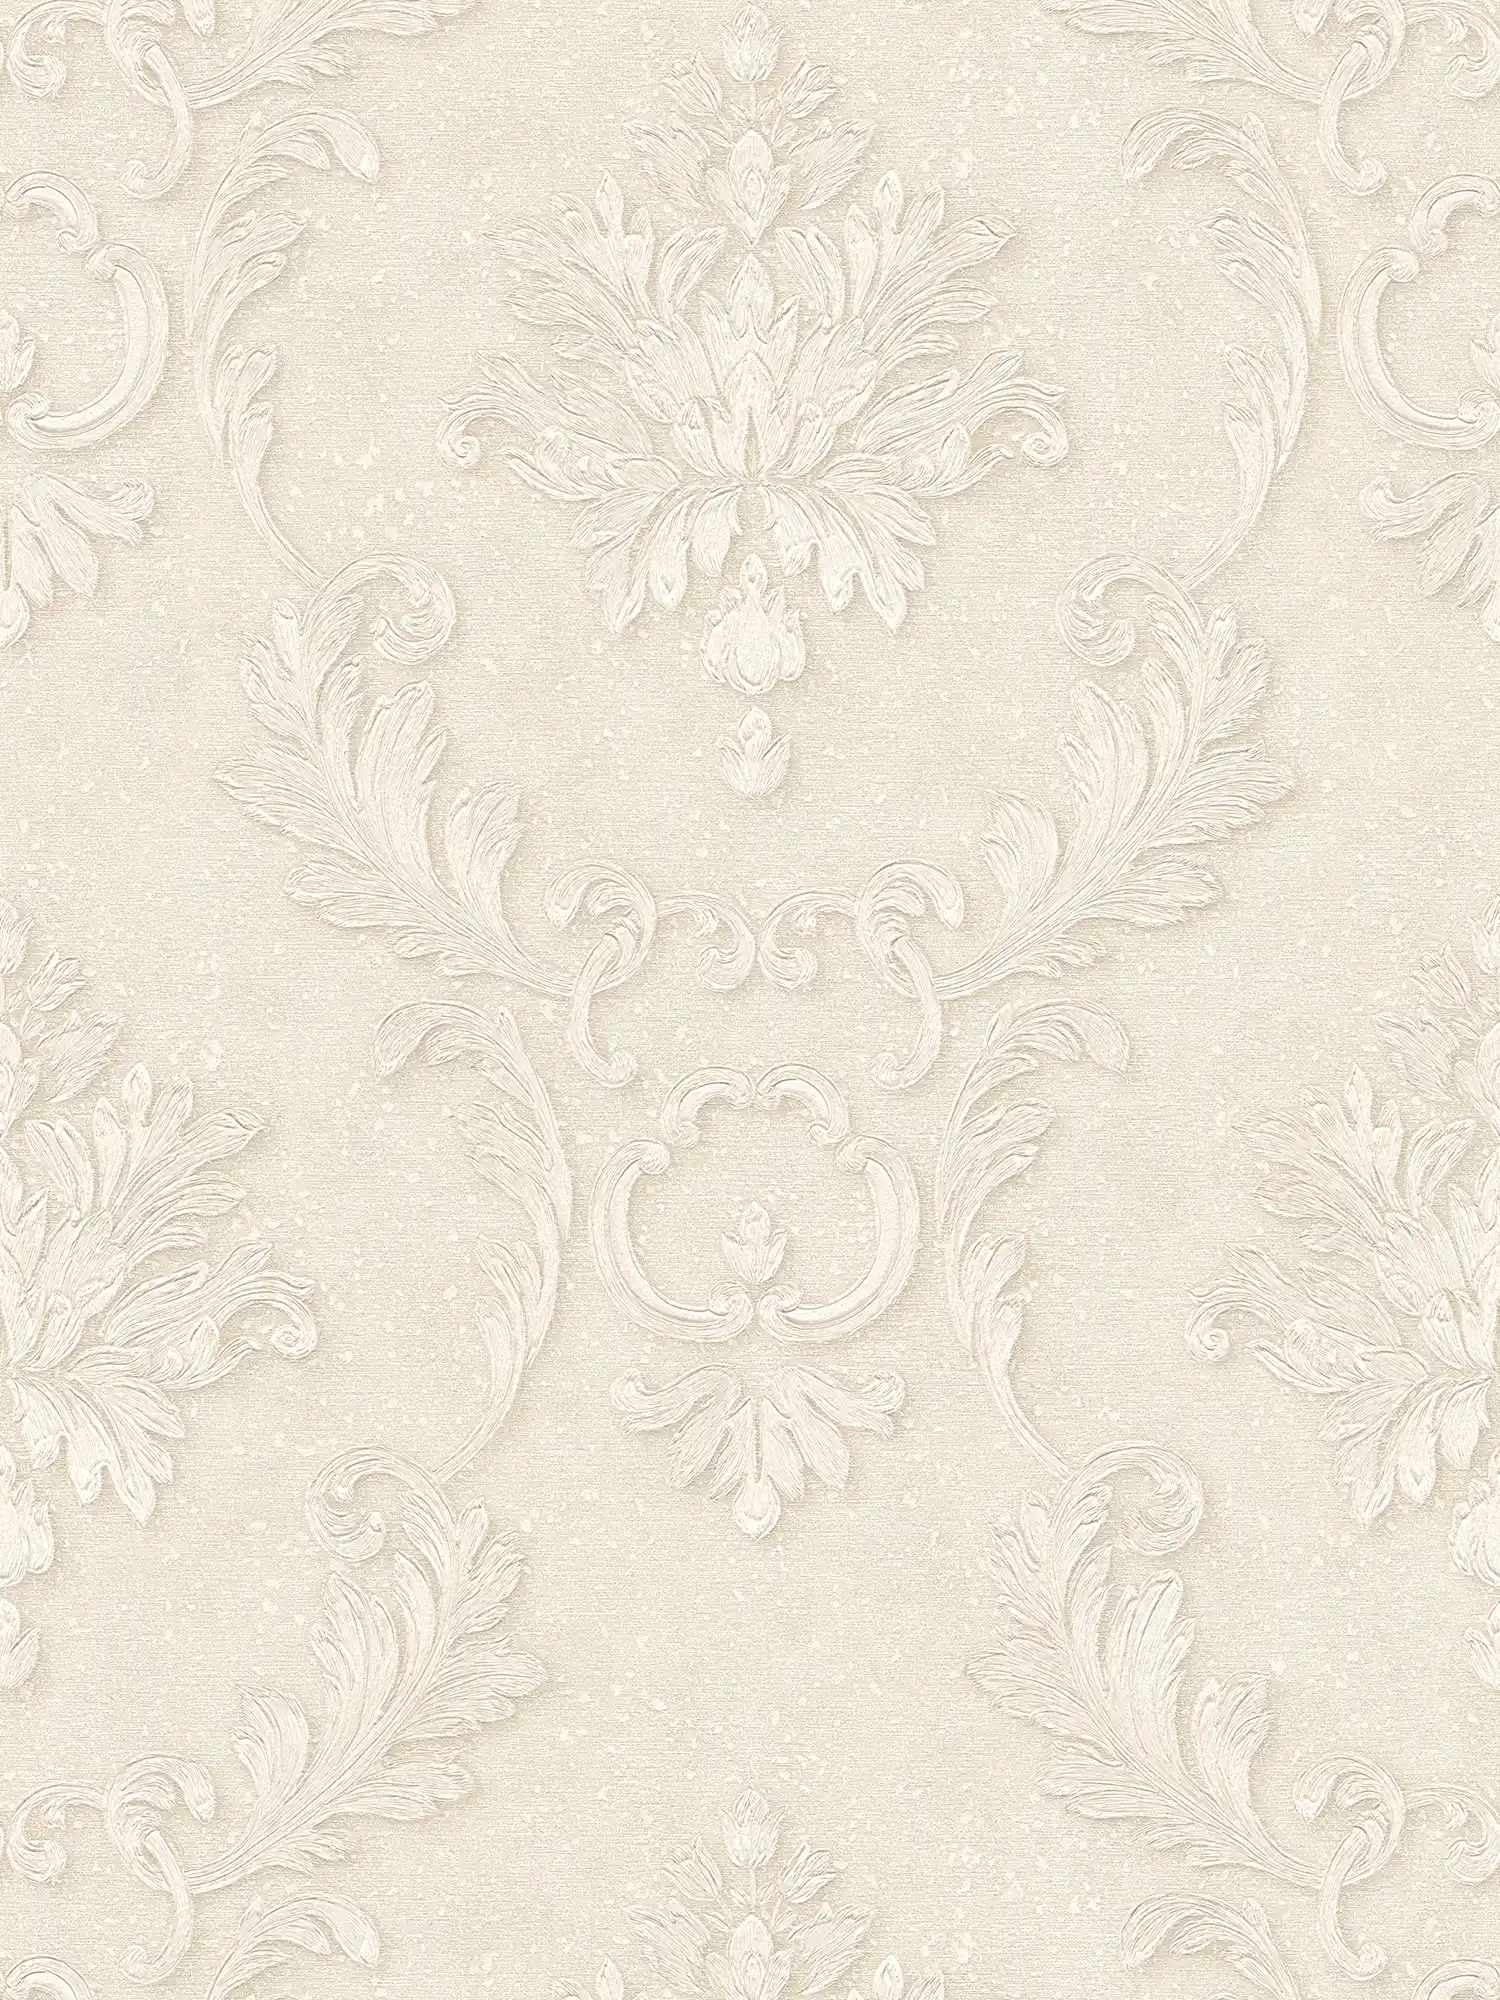         Designer wallpaper floral ornaments & metallic effect - bronze, cream
    